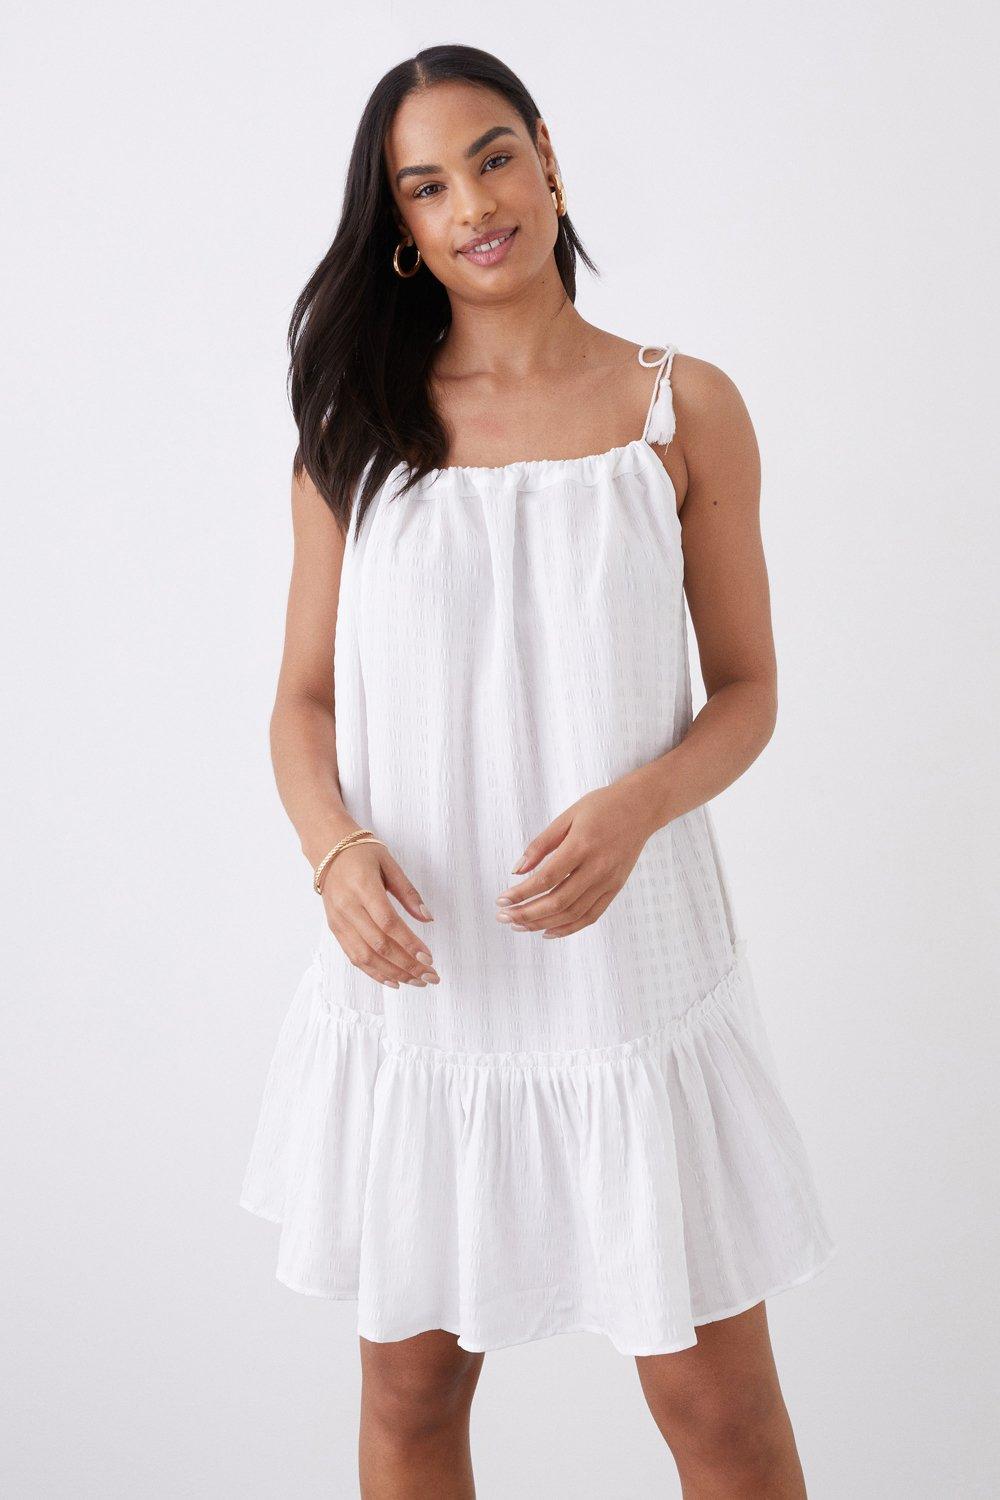 Women’s Mini Tassel Beach Dress - white - S